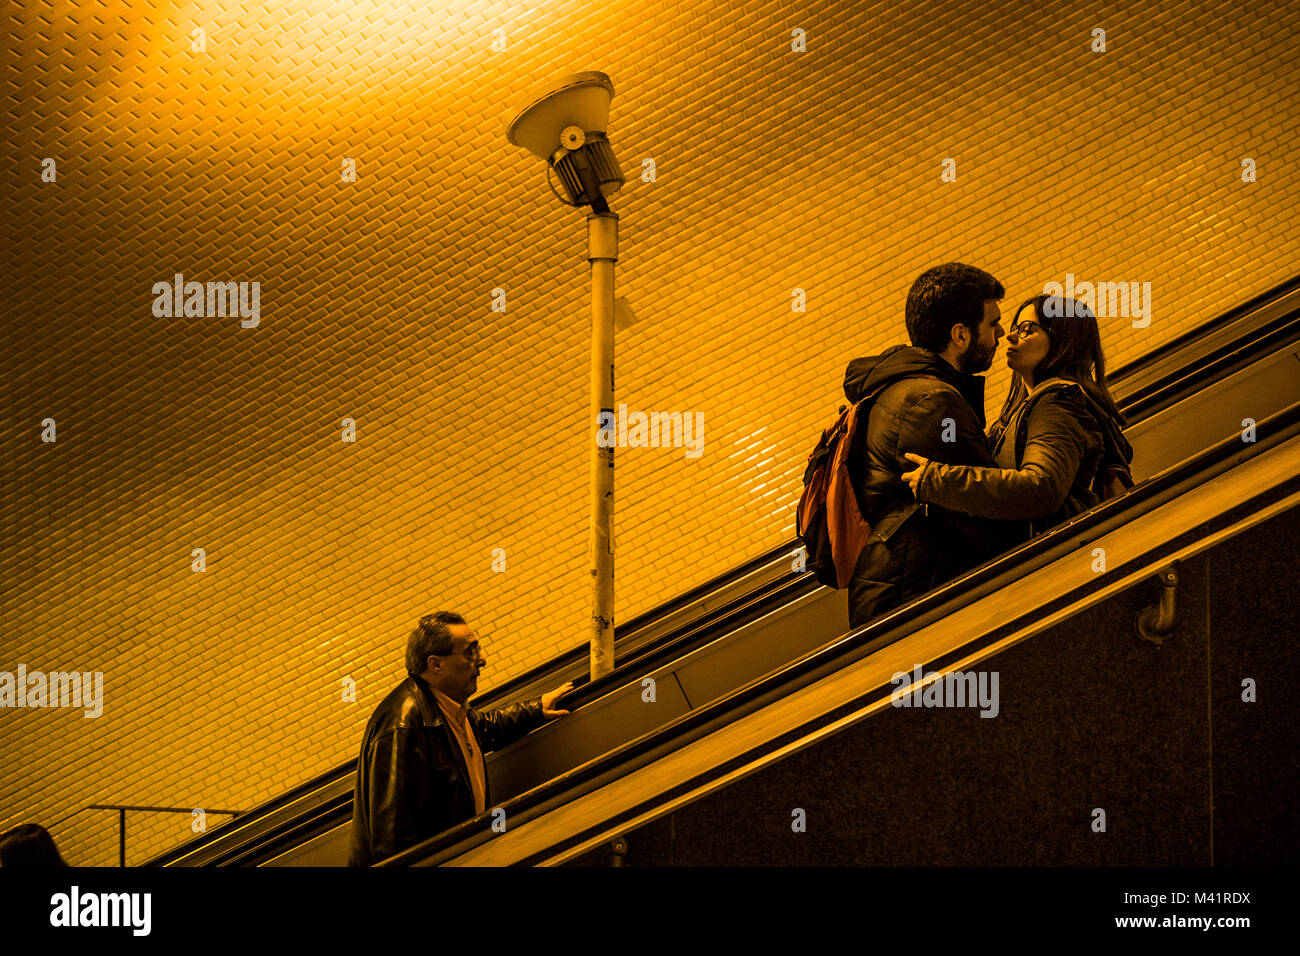 A couple kiss on the Baixa-Chiado metro station escalators in Lisbon, Portugal. Stock Photo